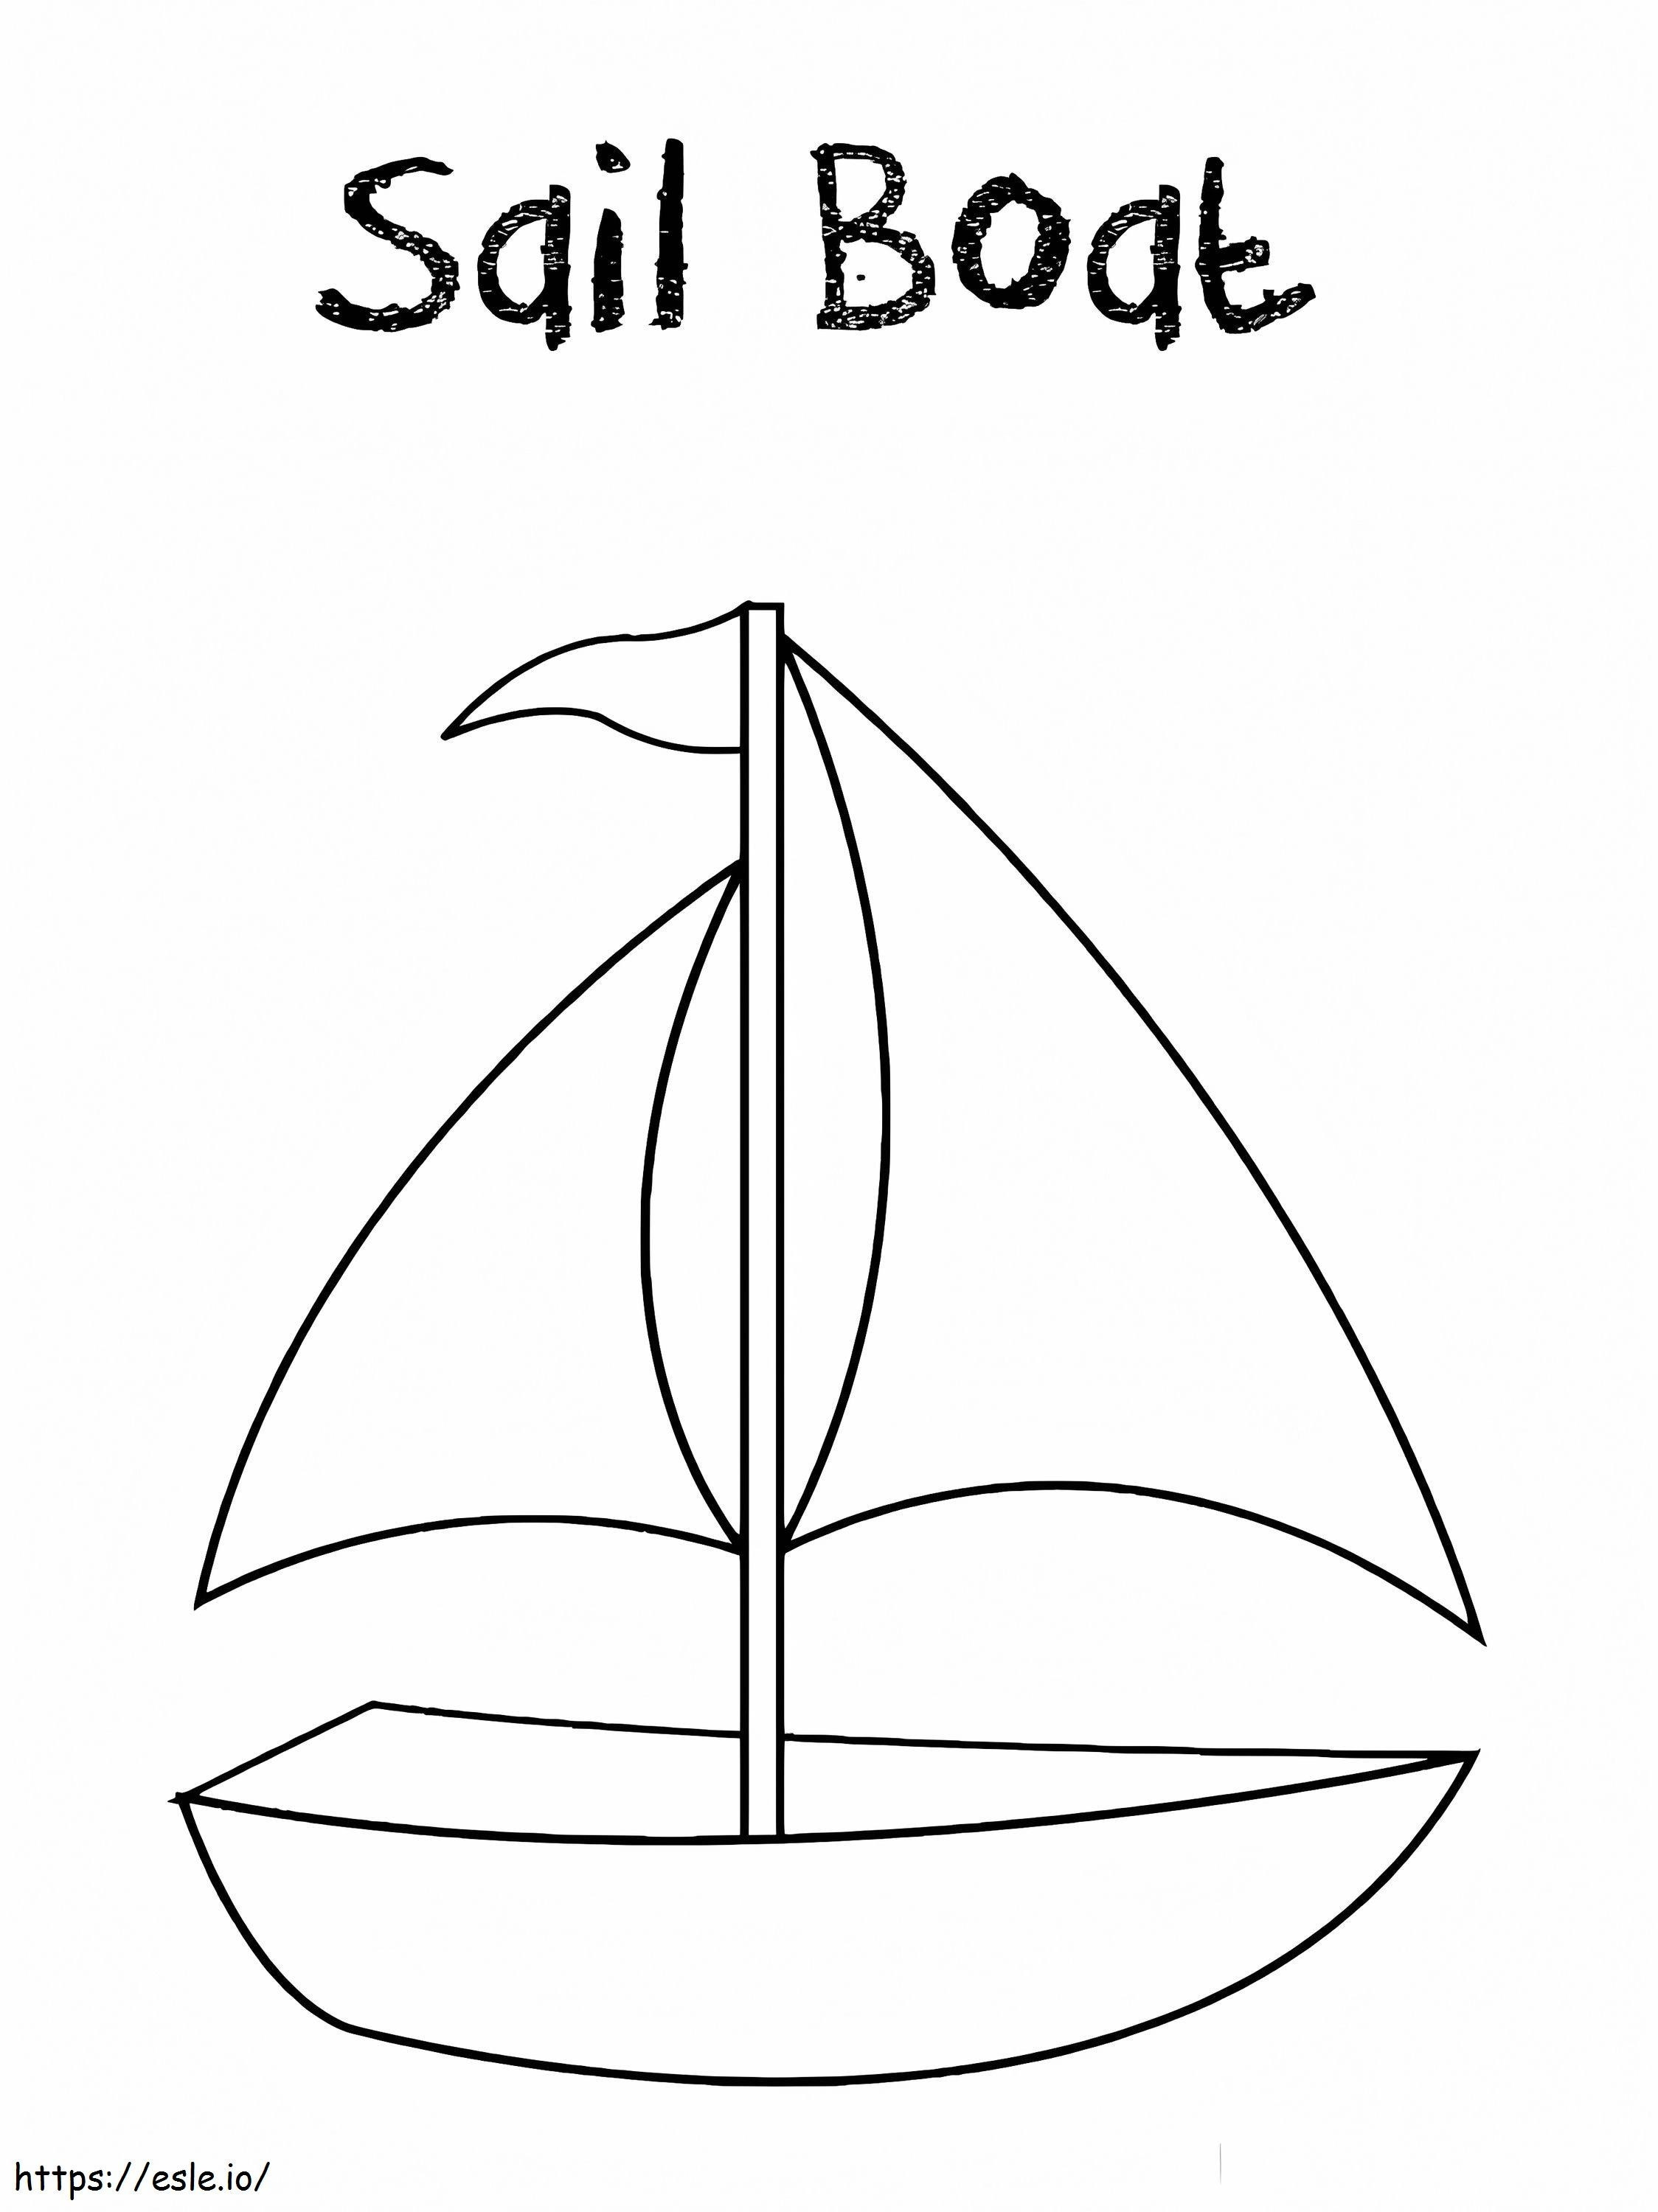 Sail Boat coloring page